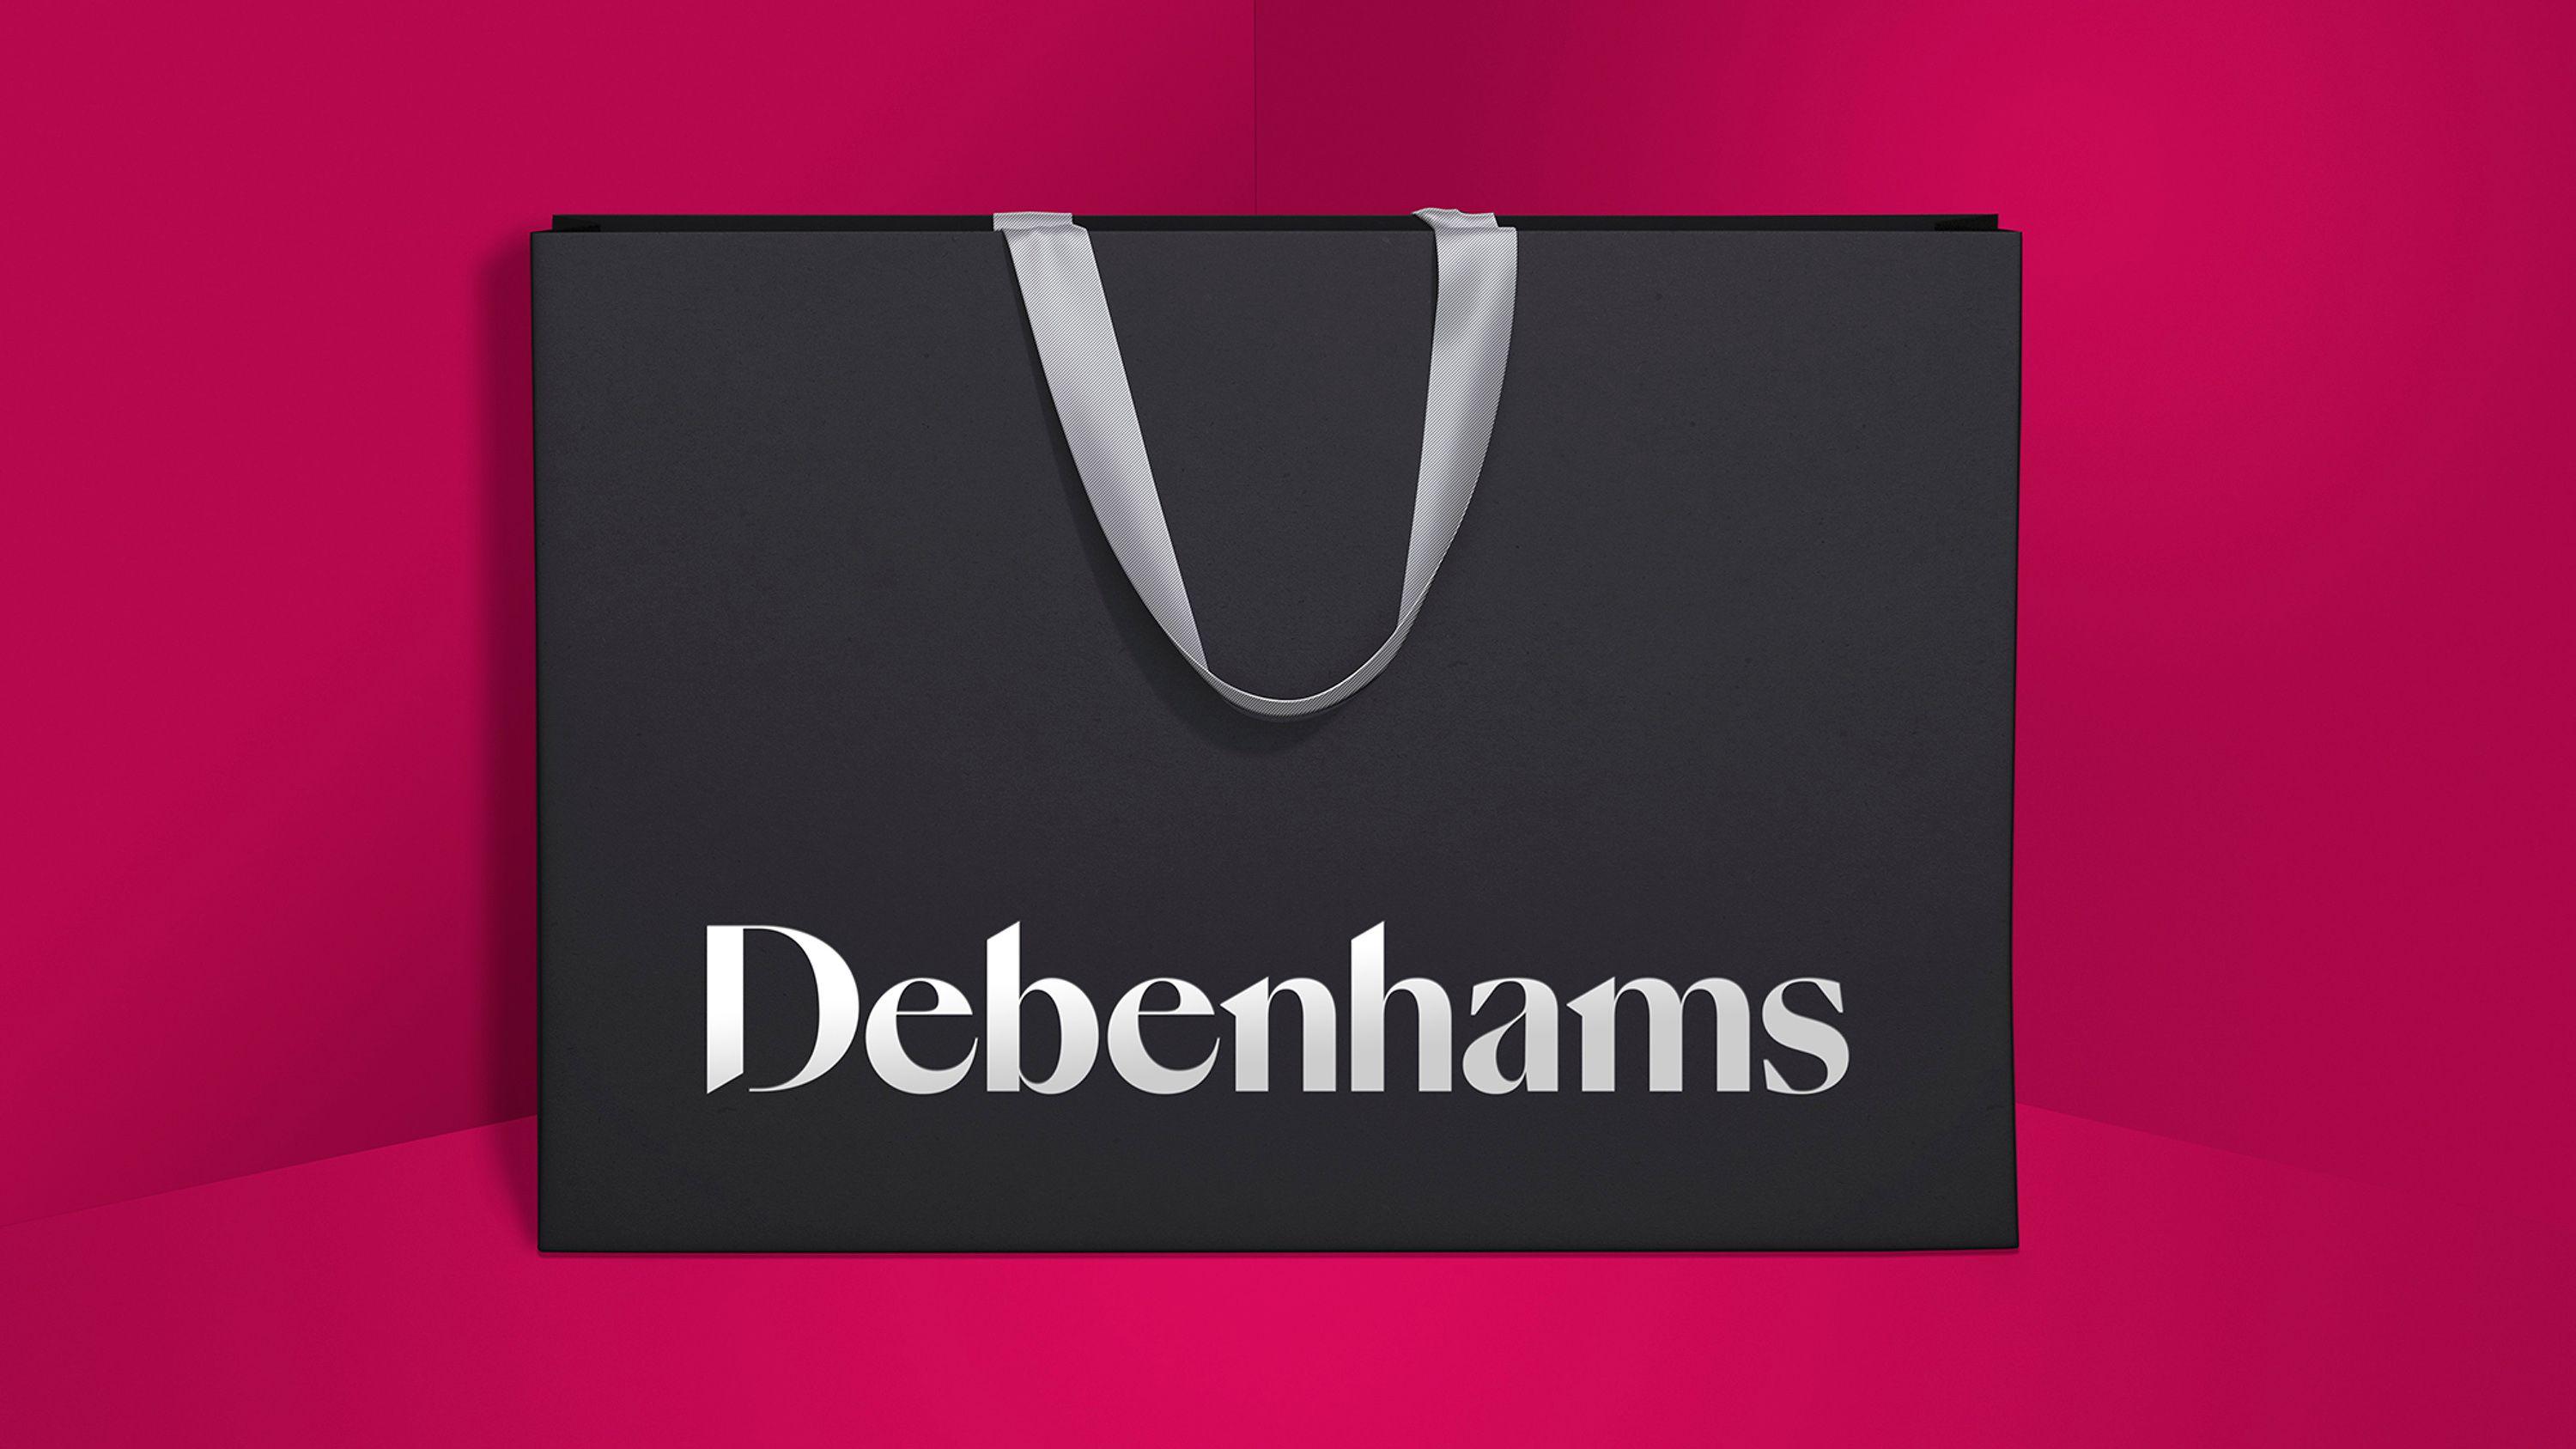 Debenhams Logo - Debenhams reveals new branding and ad campaign